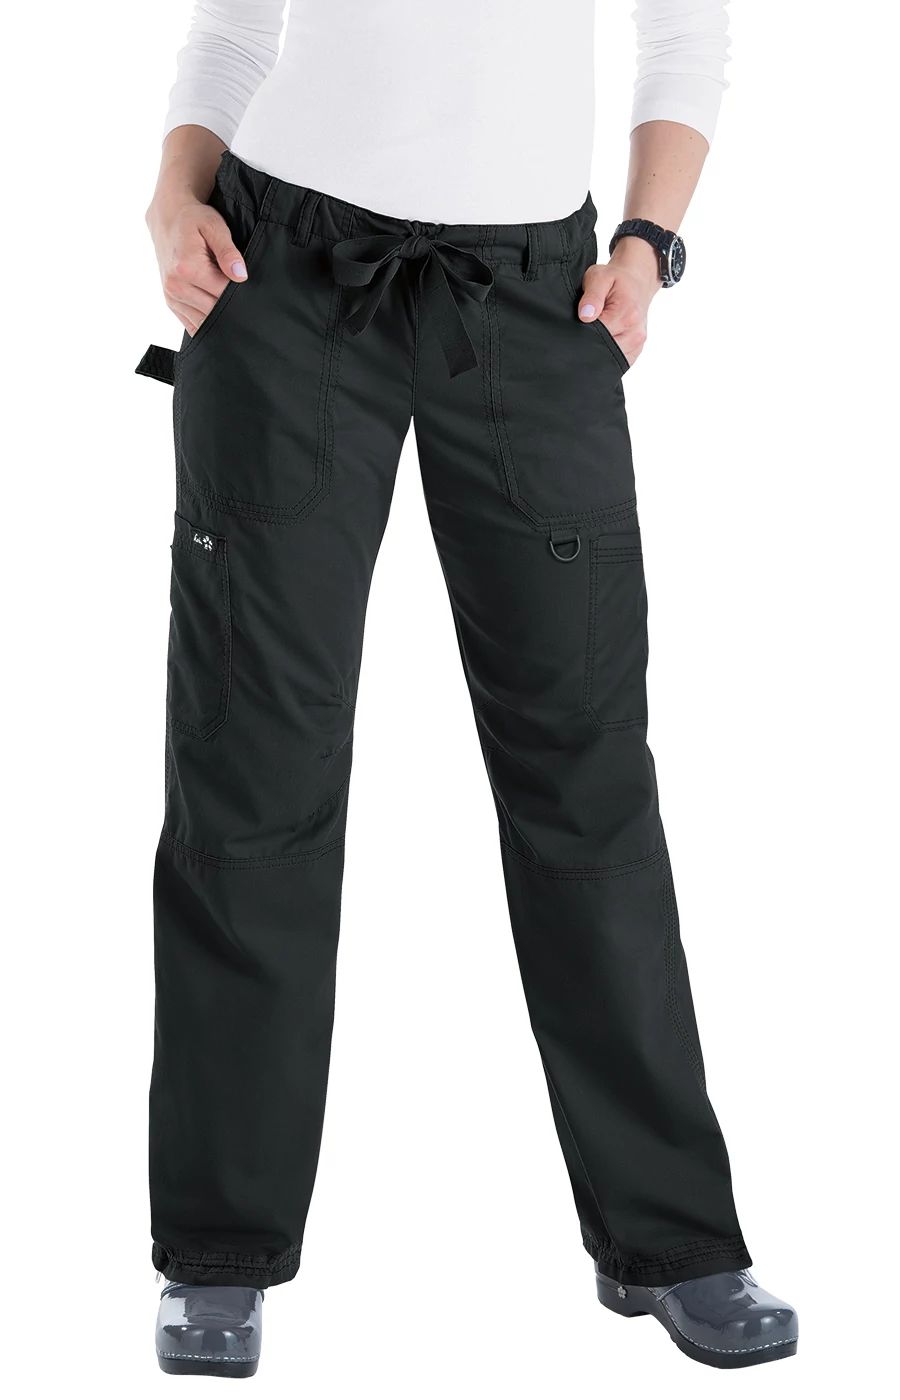 Koi Lindsey Cargo Scrub Pants - Tall | Work 'N Gear